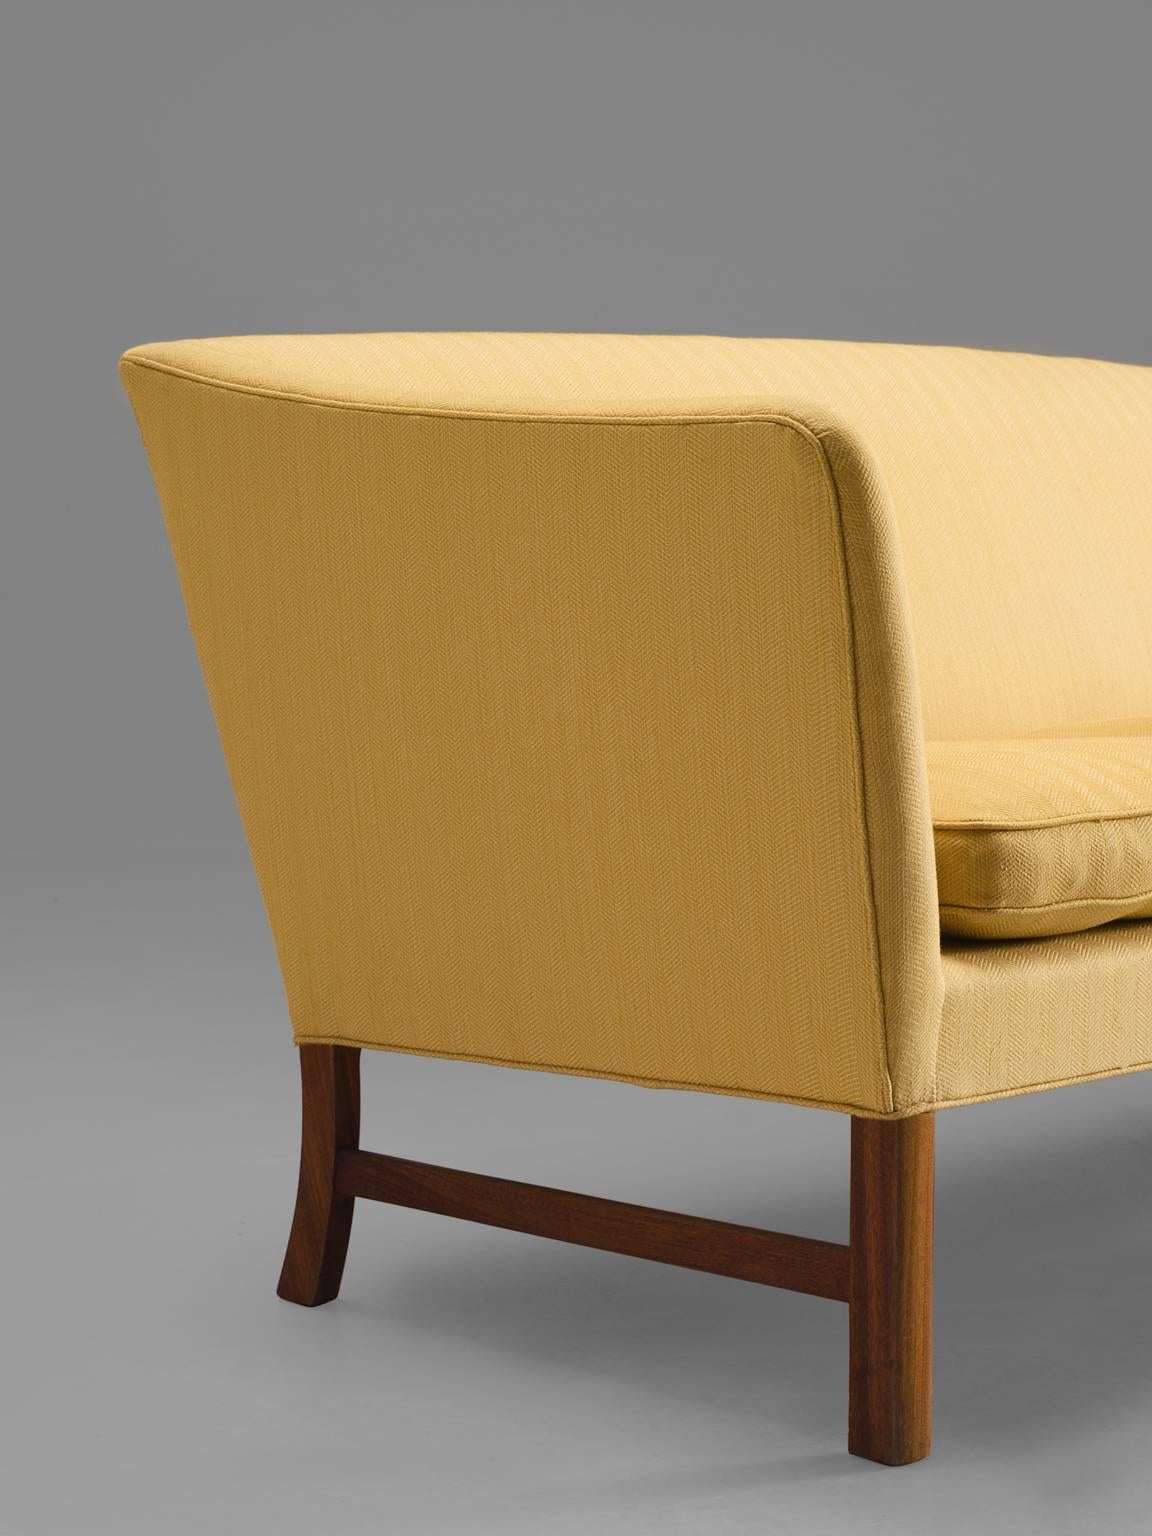 Fabric Ole Wanscher Three-Seat Sofa, circa 1950